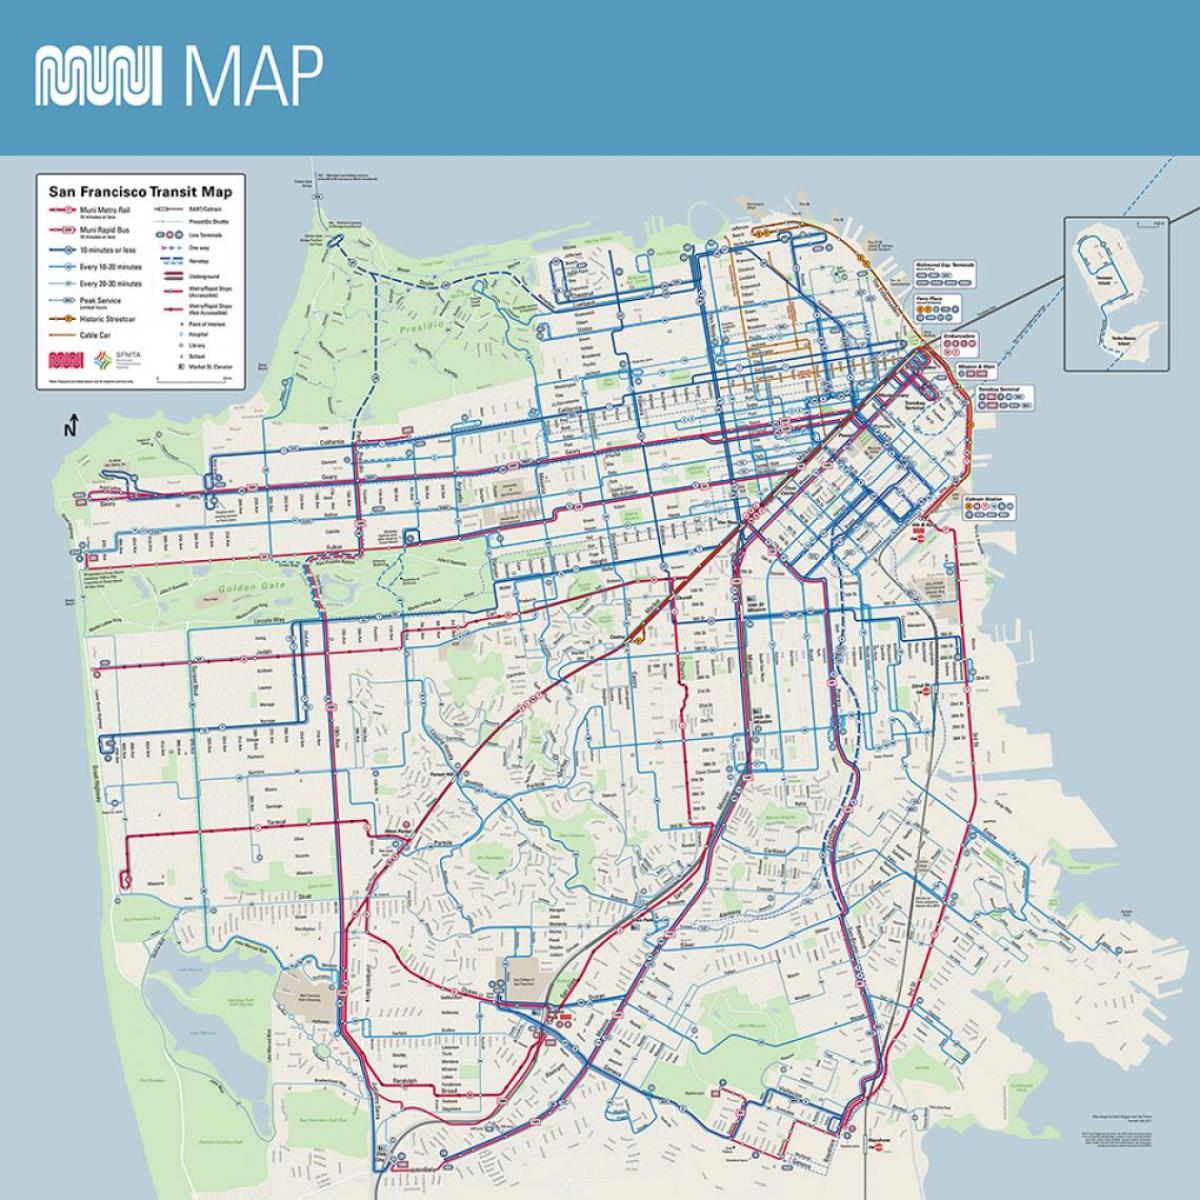 SF muni راستے کا نقشہ